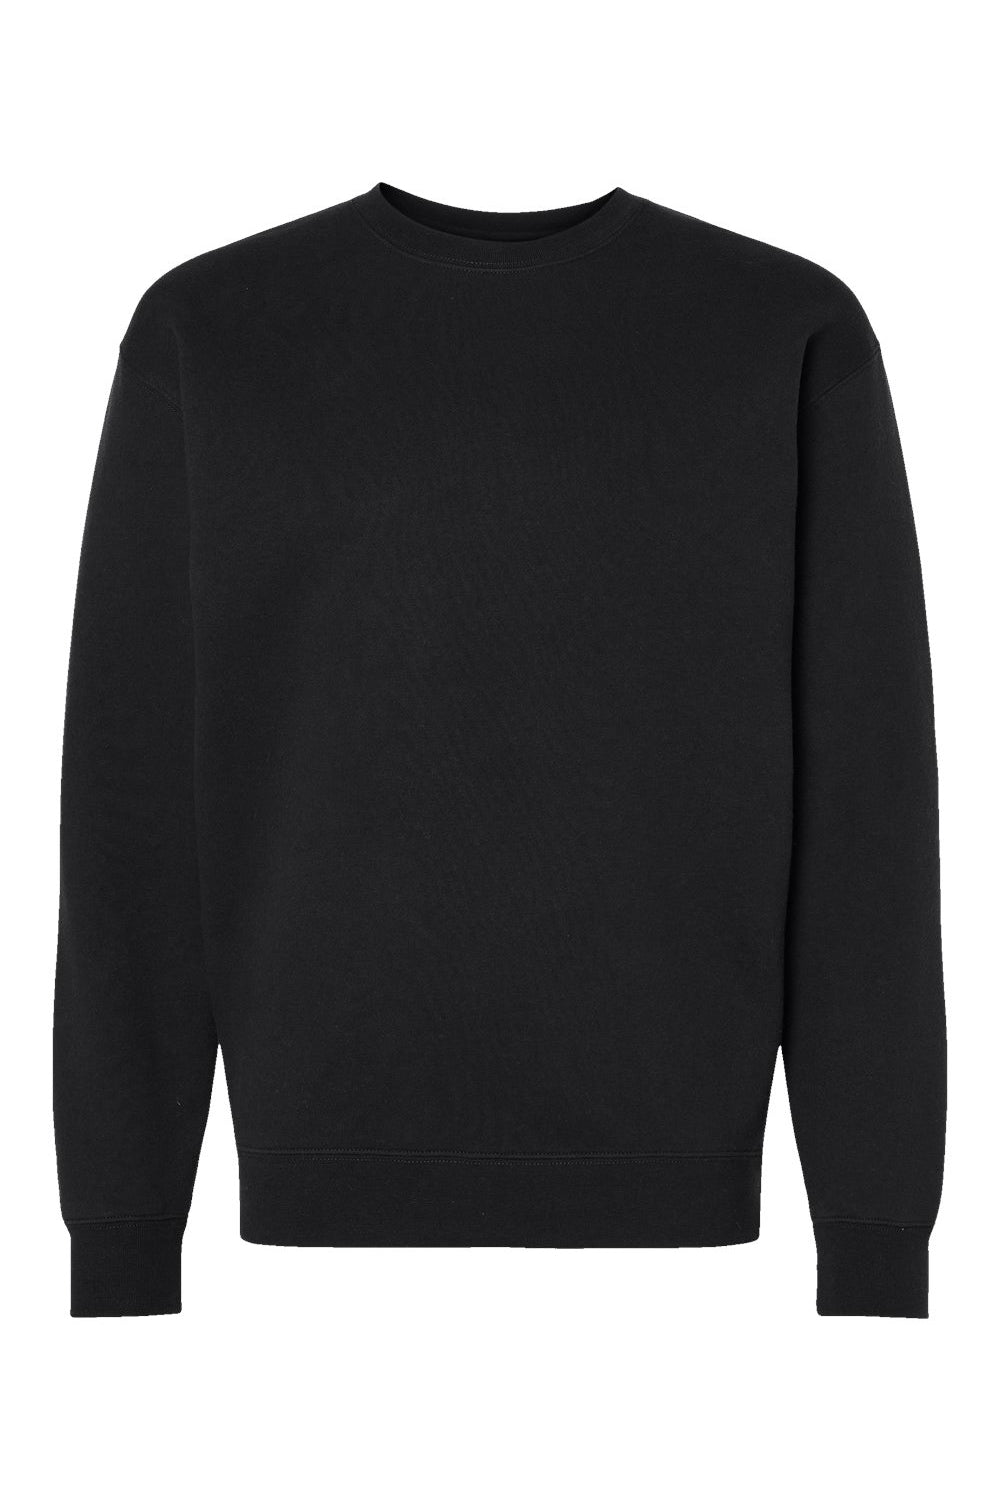 Independent Trading Co. IND3000 Mens Crewneck Sweatshirt Black Flat Front